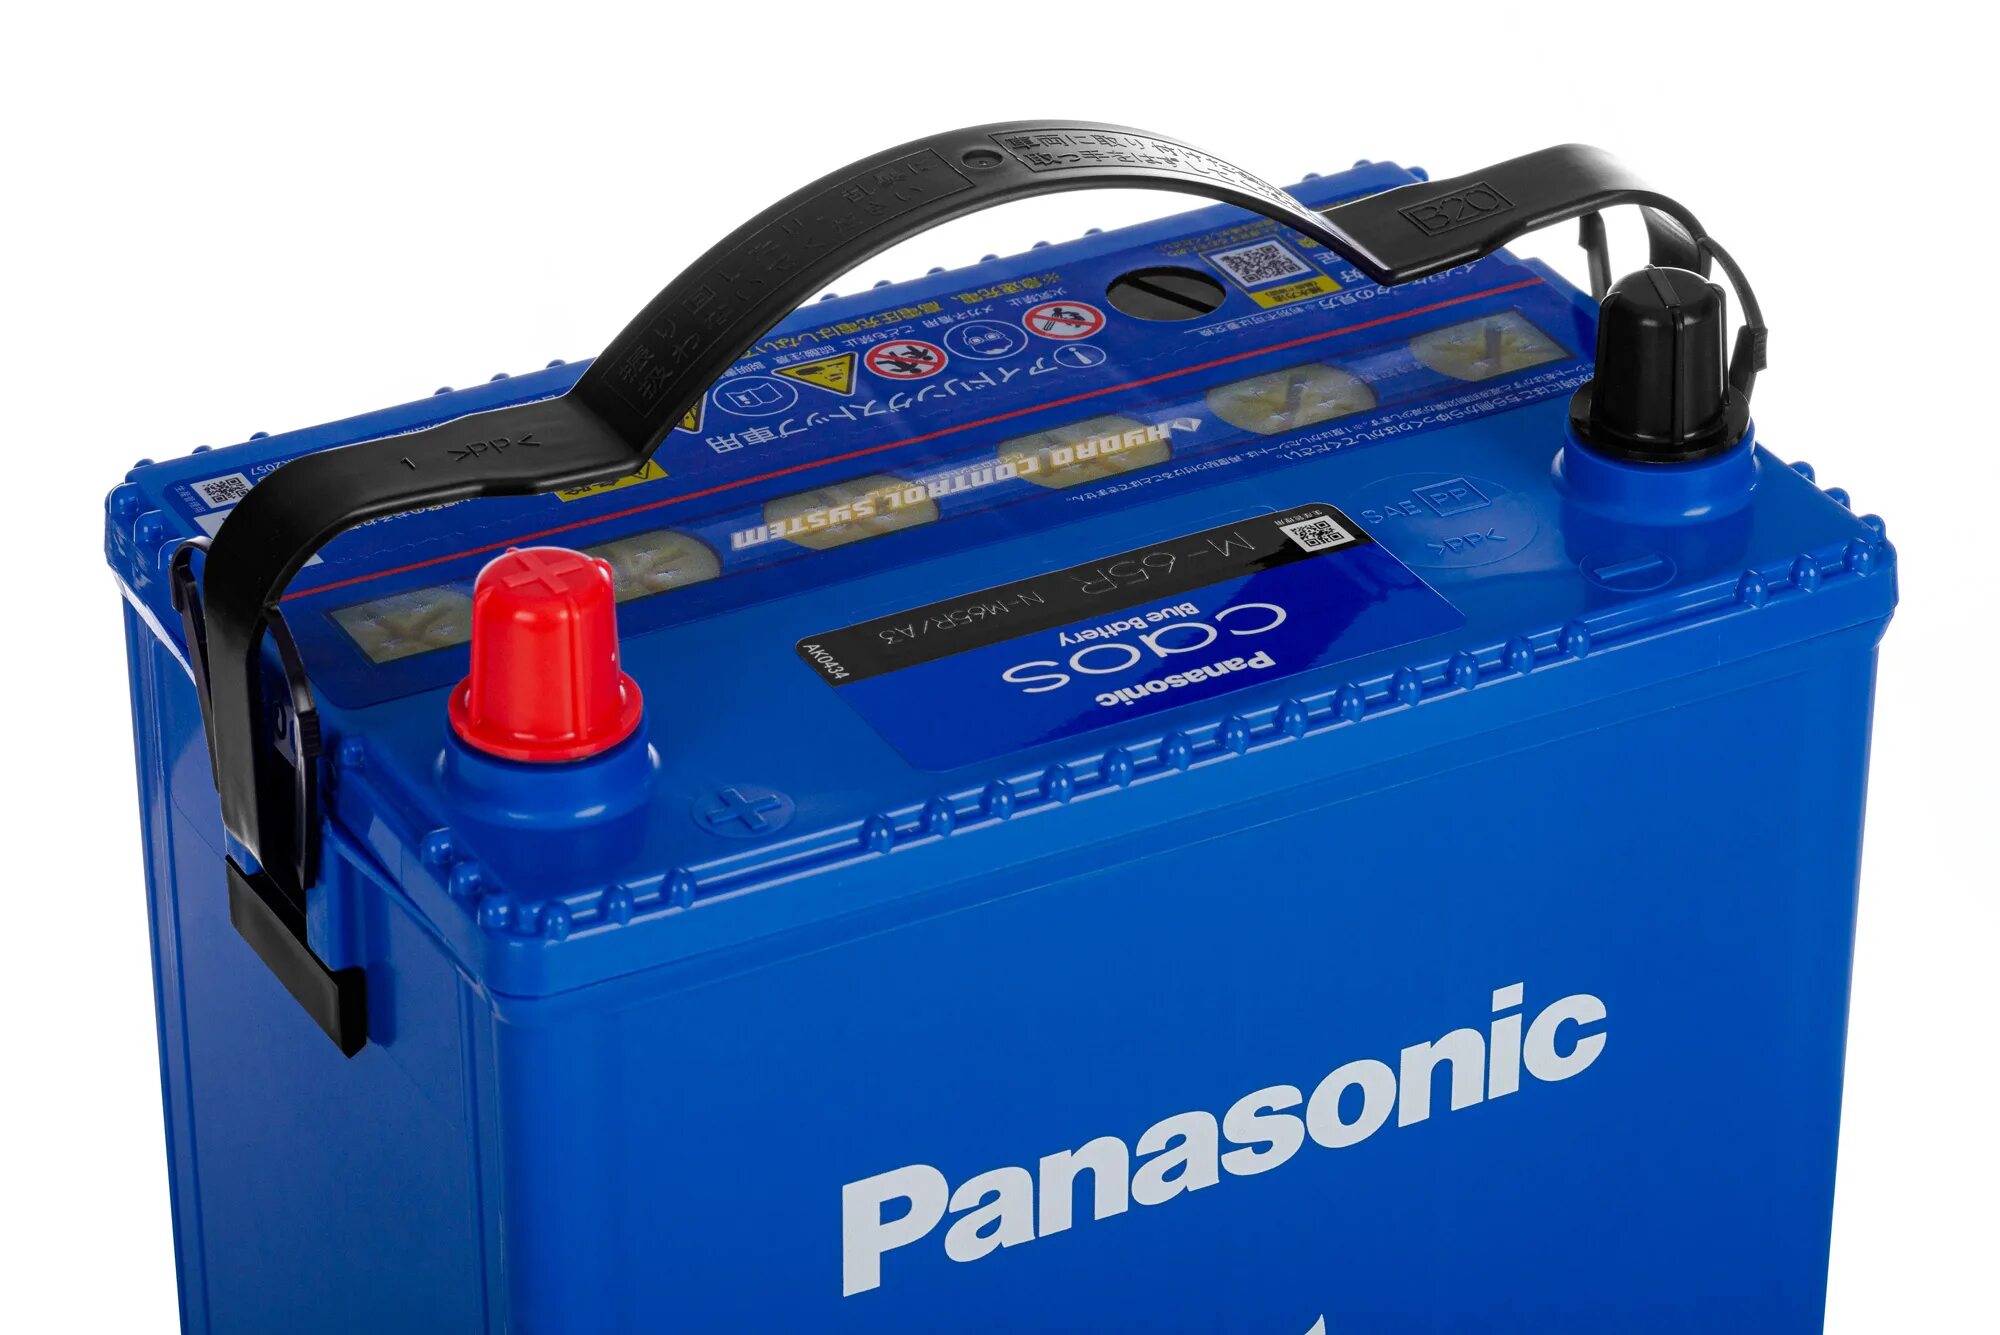 Купить японский аккумулятор. Аккумулятор автомобильный Panasonic caos Blue Battery n - m65/a3. Аккумулятор Панасоник для авто 65. Аккумулятор Panasonic caos Blue Battery. Аккумулятор японский 75d23l/dt2.